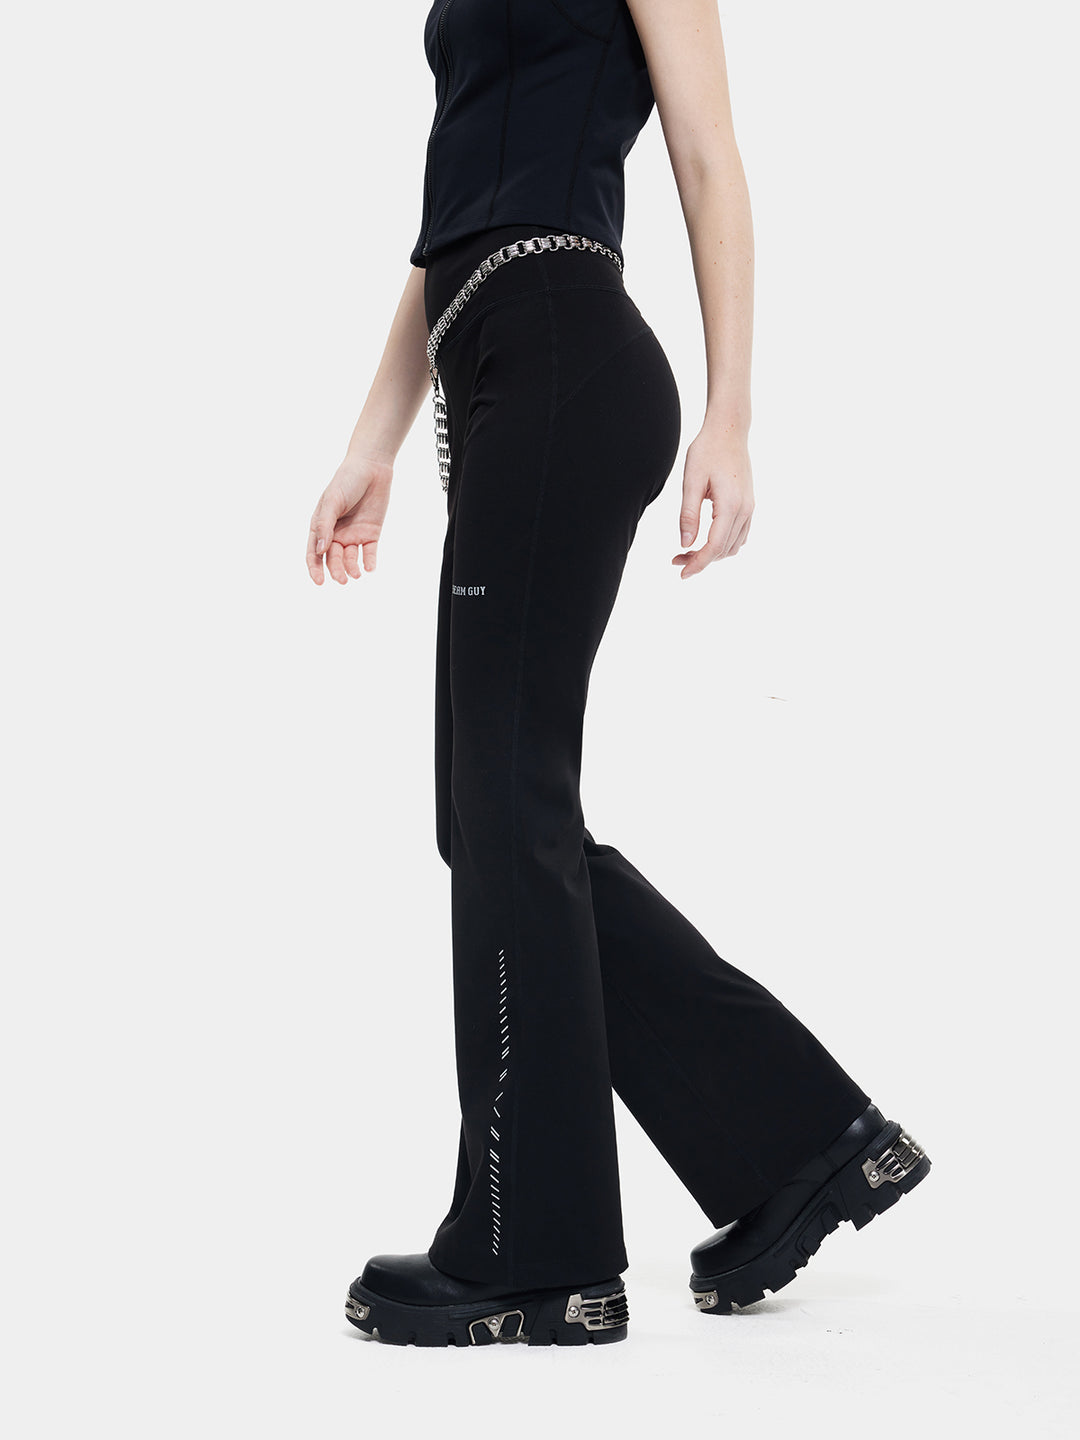 T-one Women's Slim Boot Cut Stretch Pants-Black